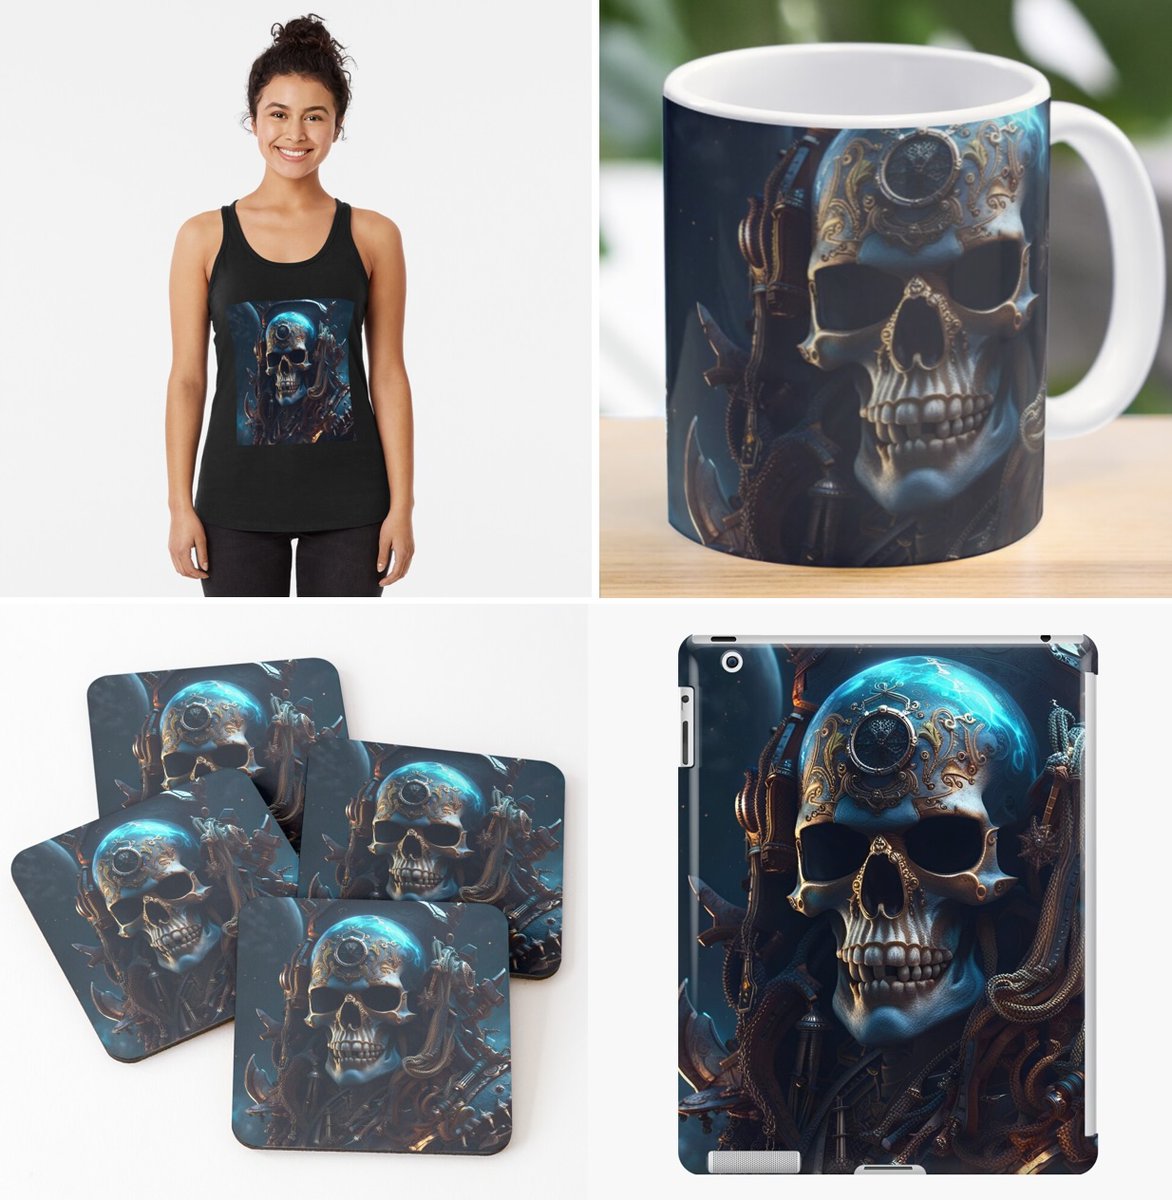 <#Skull #Space #Pirate> 🤖#AICreation on #halloweengifts #coasters #tshirt #ipadcase #mug on my #redbubble
redbubble.com/shop/ap/153080…

#AI #AIart #AIartist #digitalart #halloweendecor #blanket #bedandbath #bag #halloweenshirt #halloweendesign #halloweenartwork #skullart #skulldesign